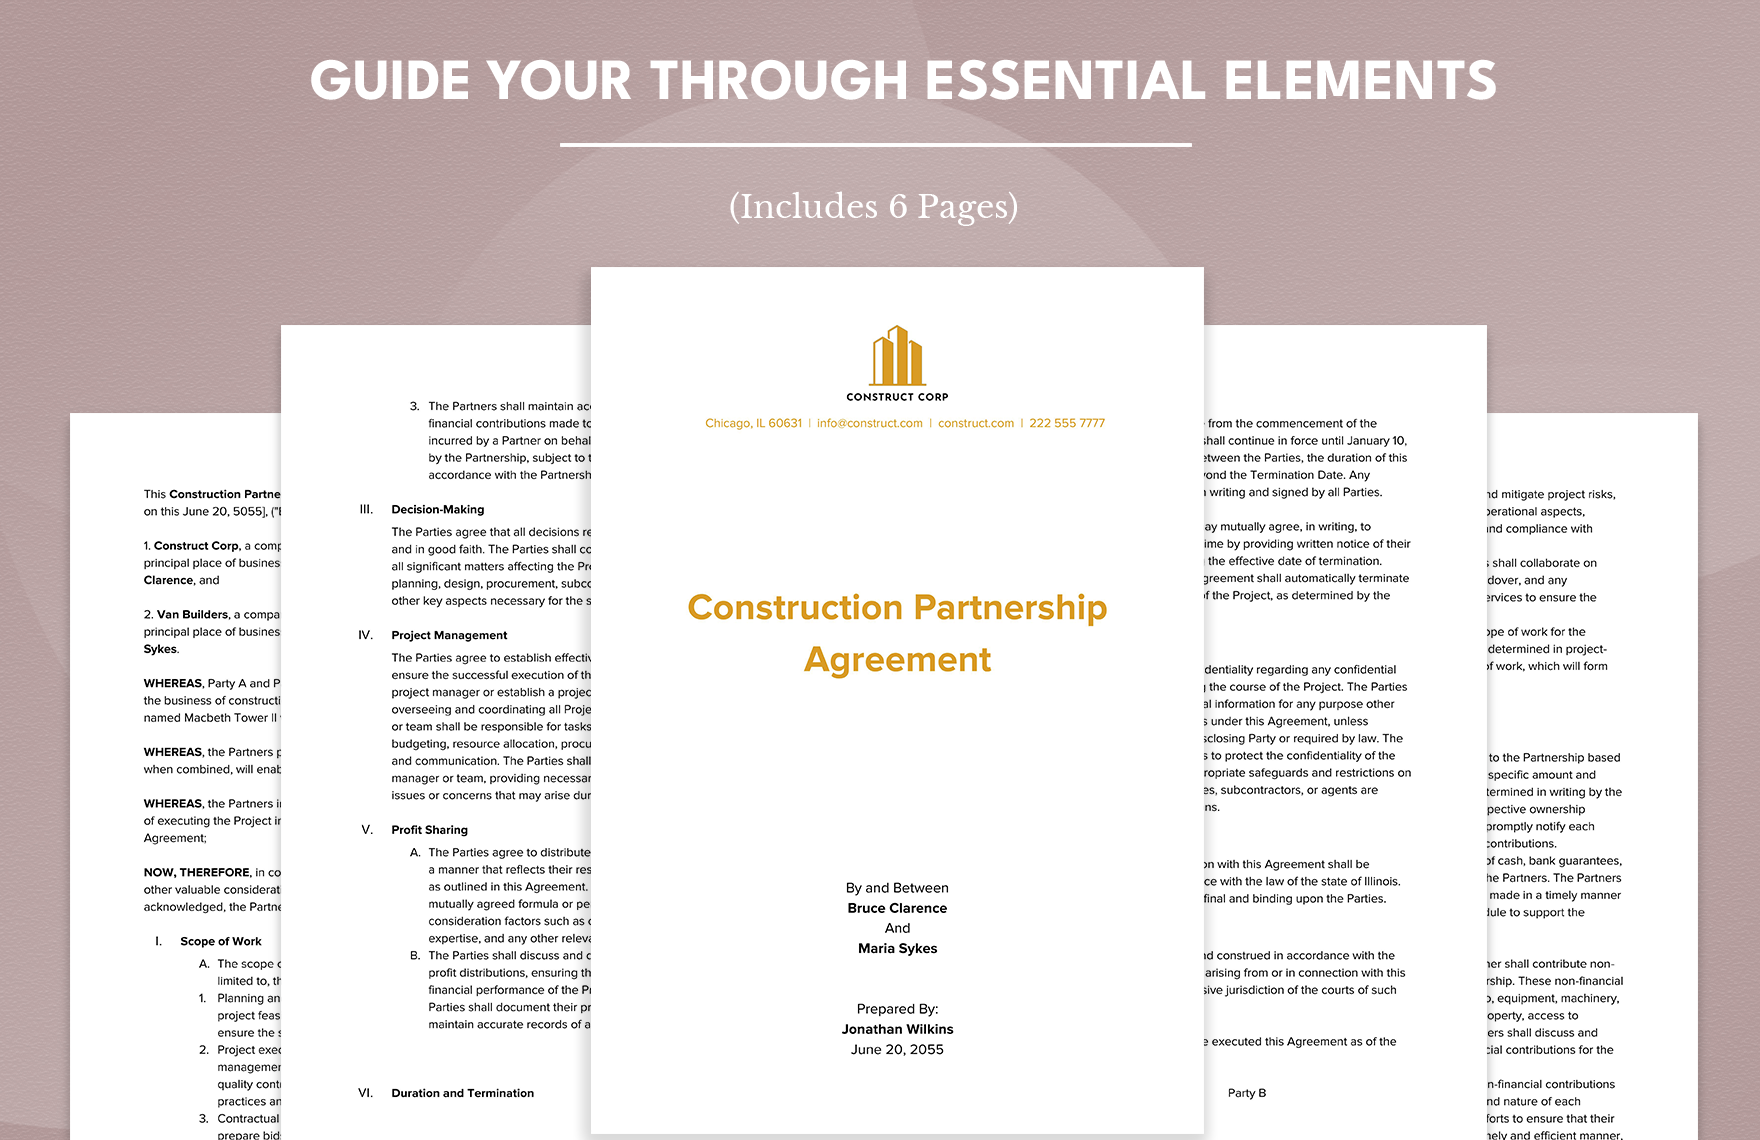 Construction Partnership Agreement